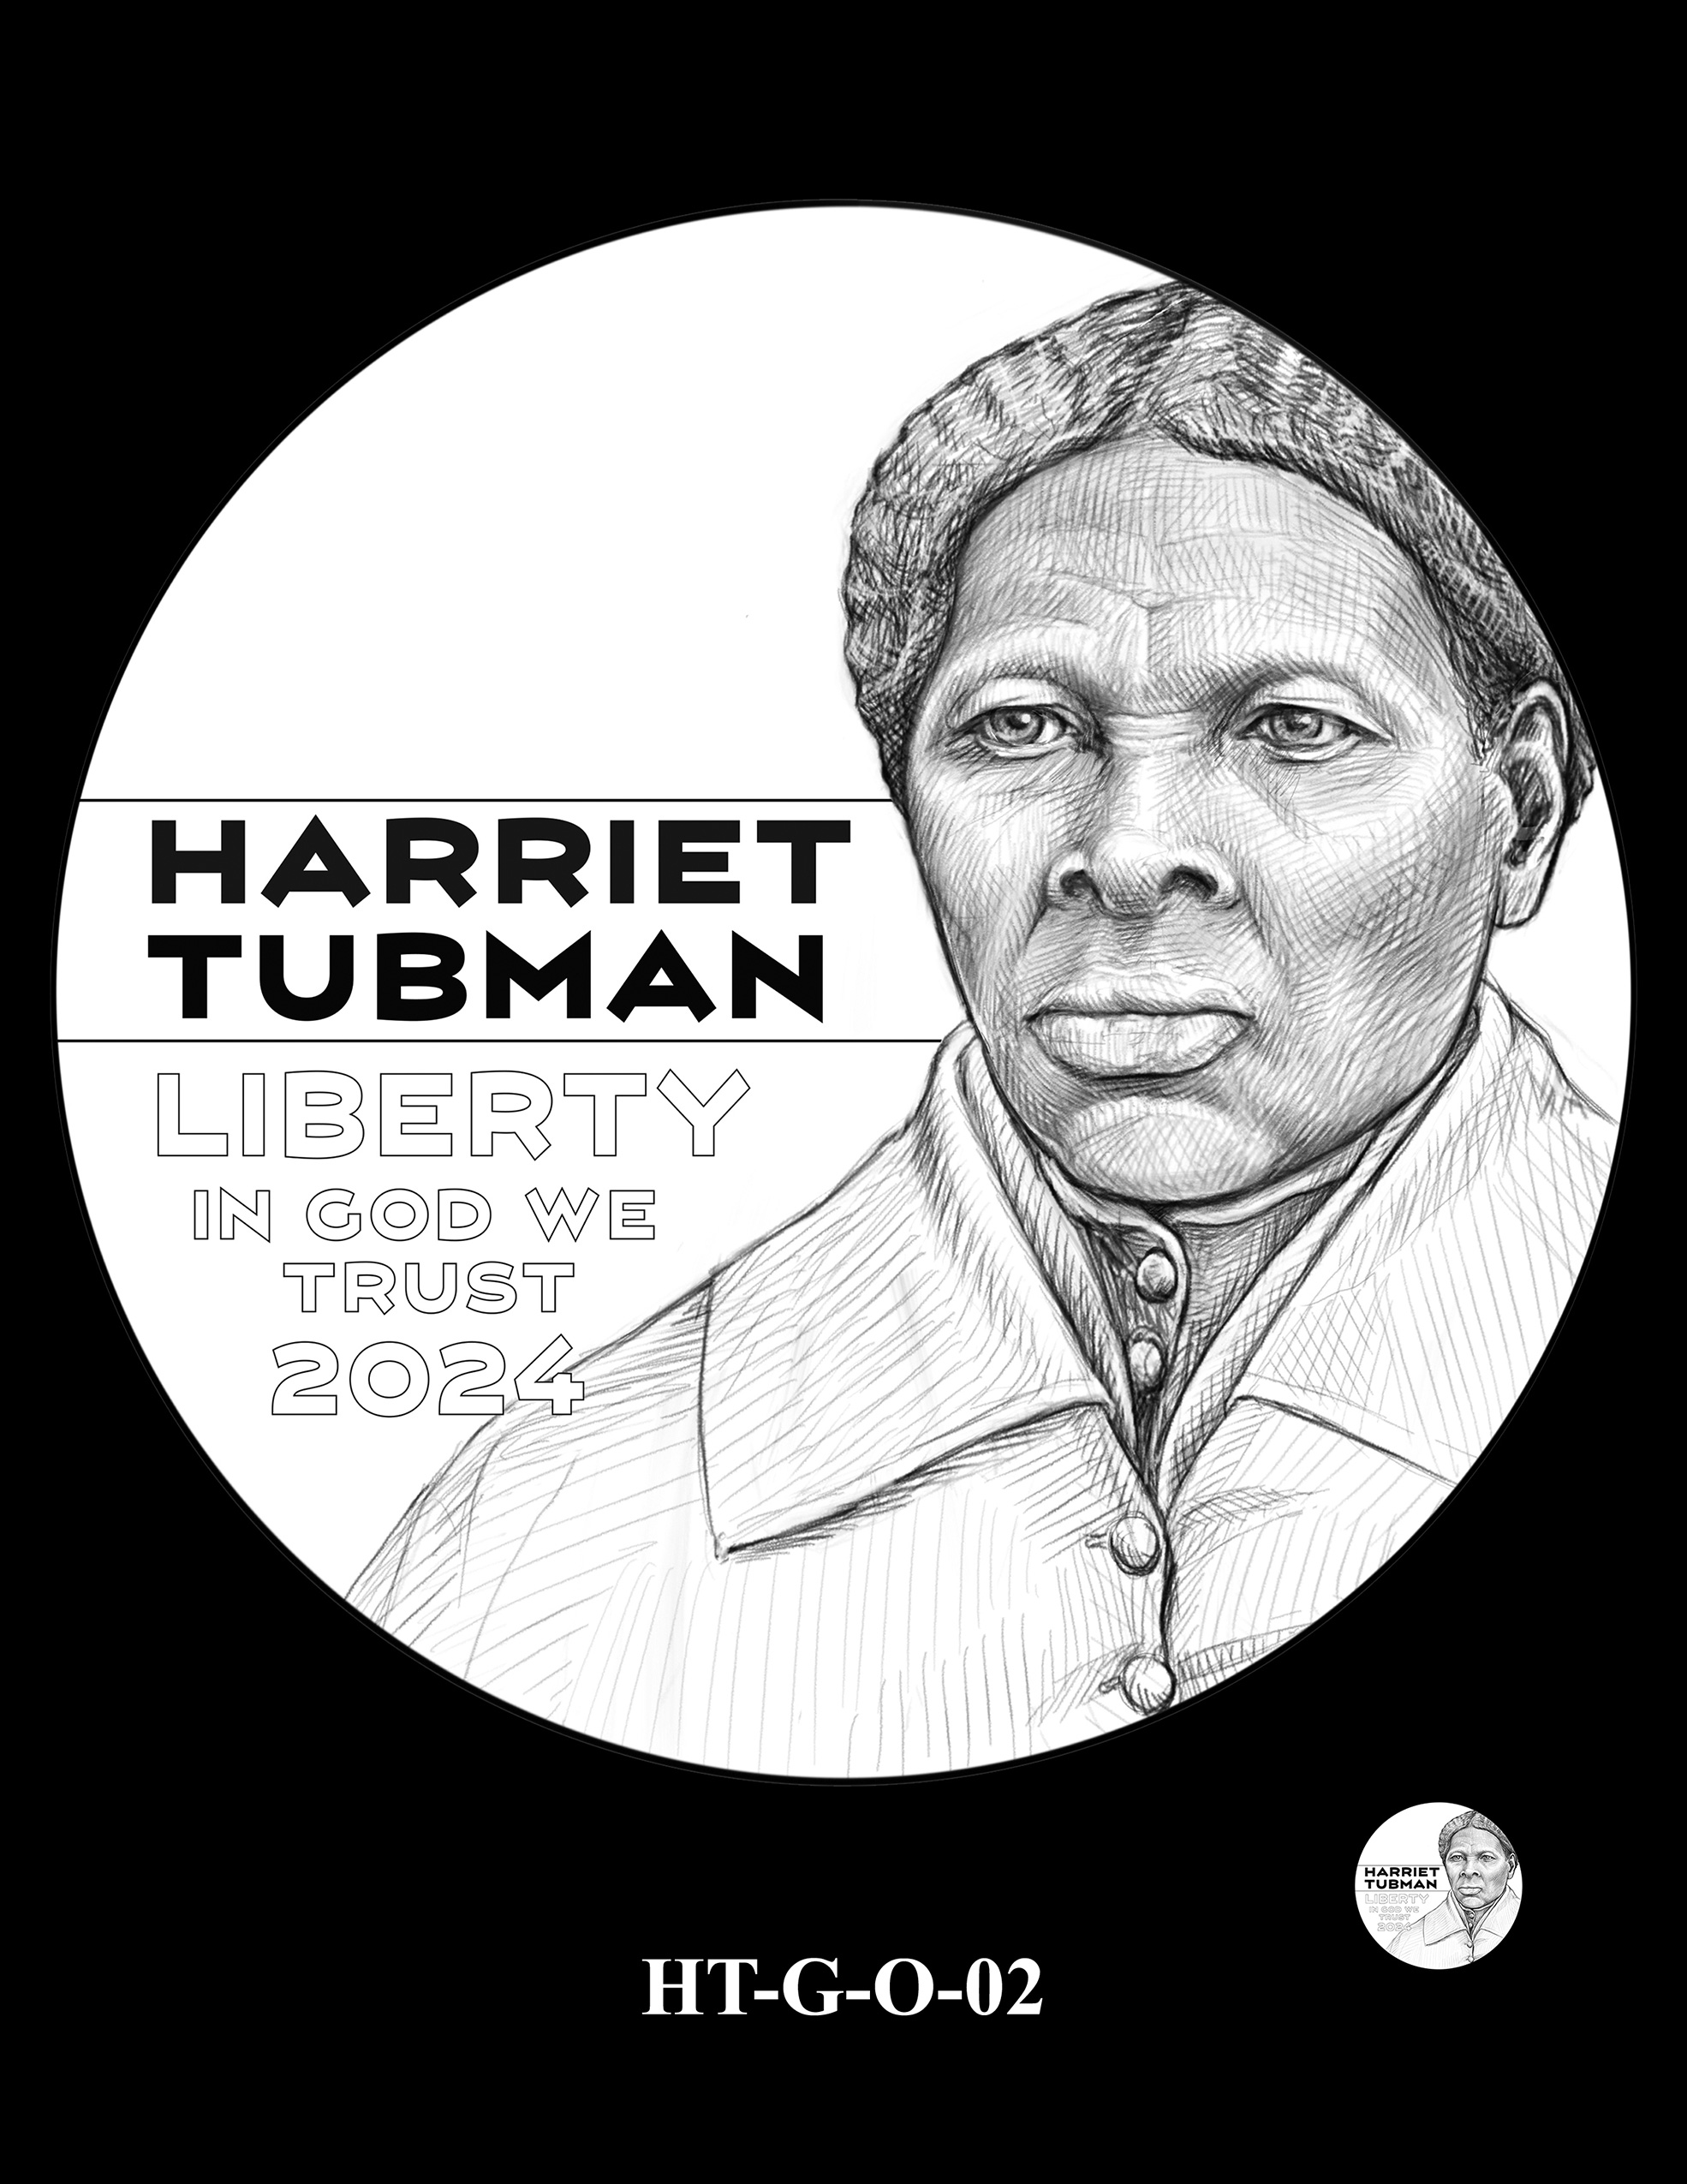 HT-G-O-02 -- Harriet Tubman